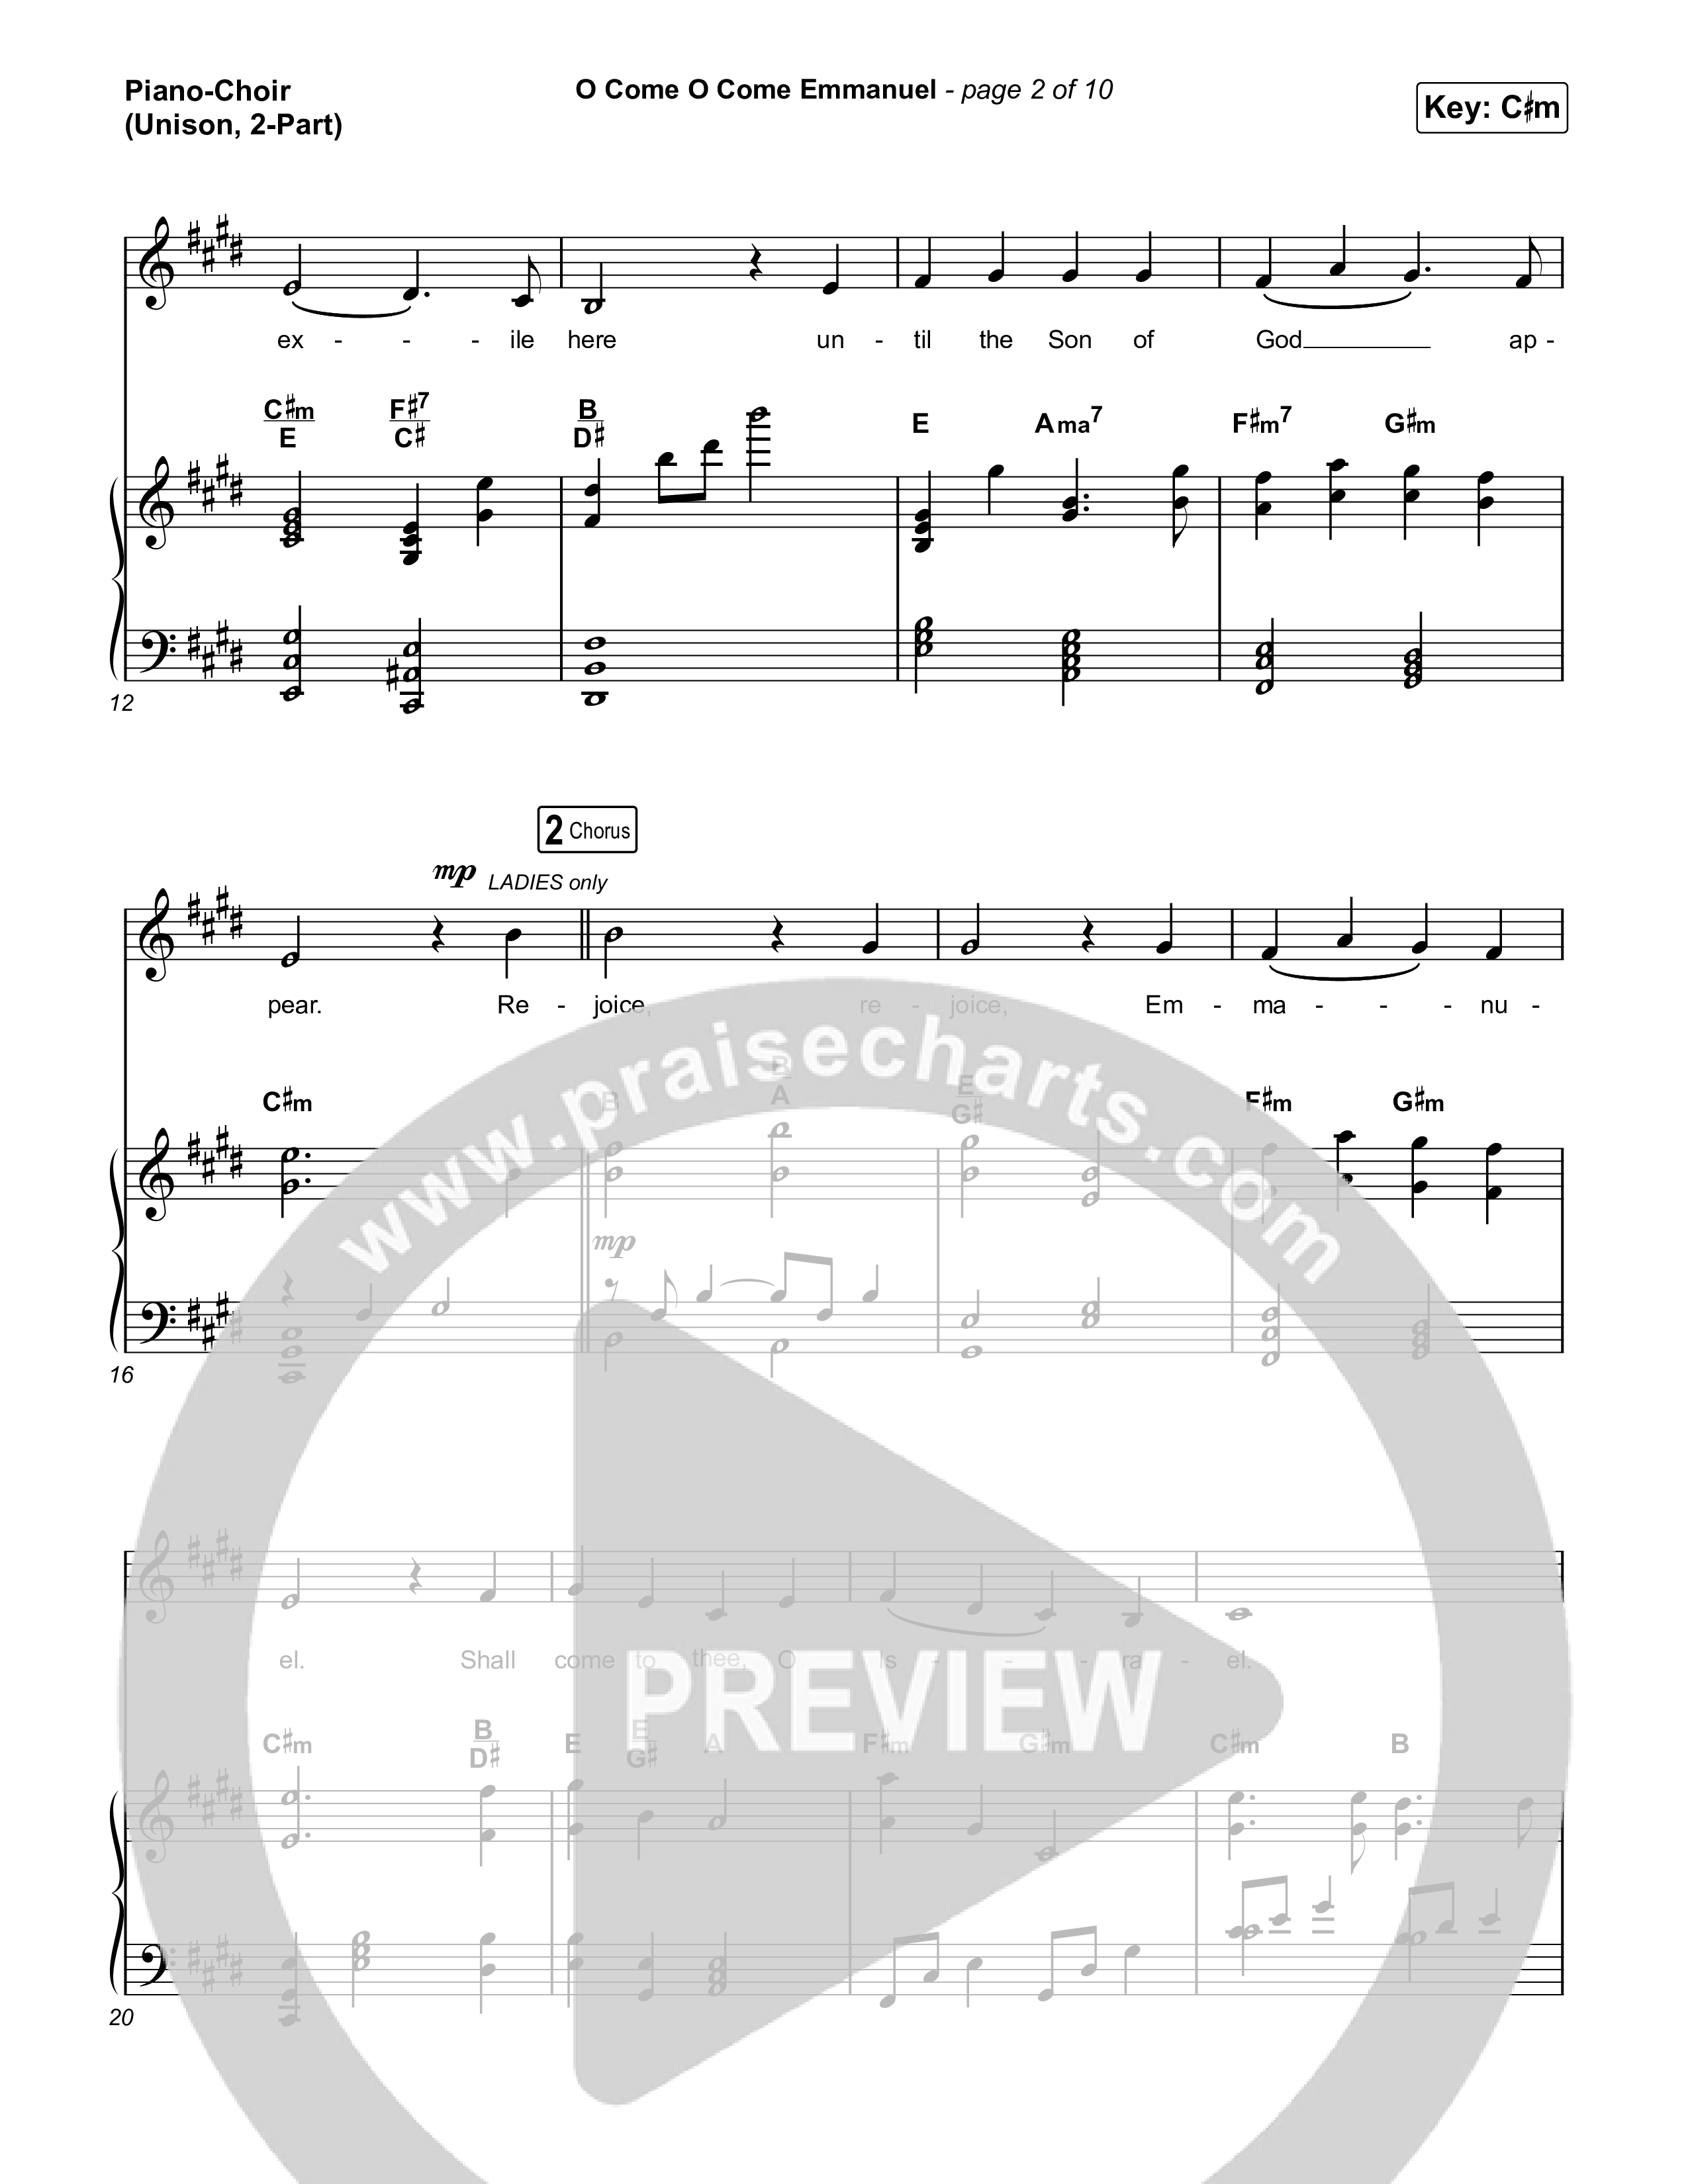 O Come O Come Emmanuel (Unison/2-Part Choir) Piano/Choir  (Uni/2-Part) (We The Kingdom / Dante Bowe / Maverick City Music / Arr. Mason Brown)